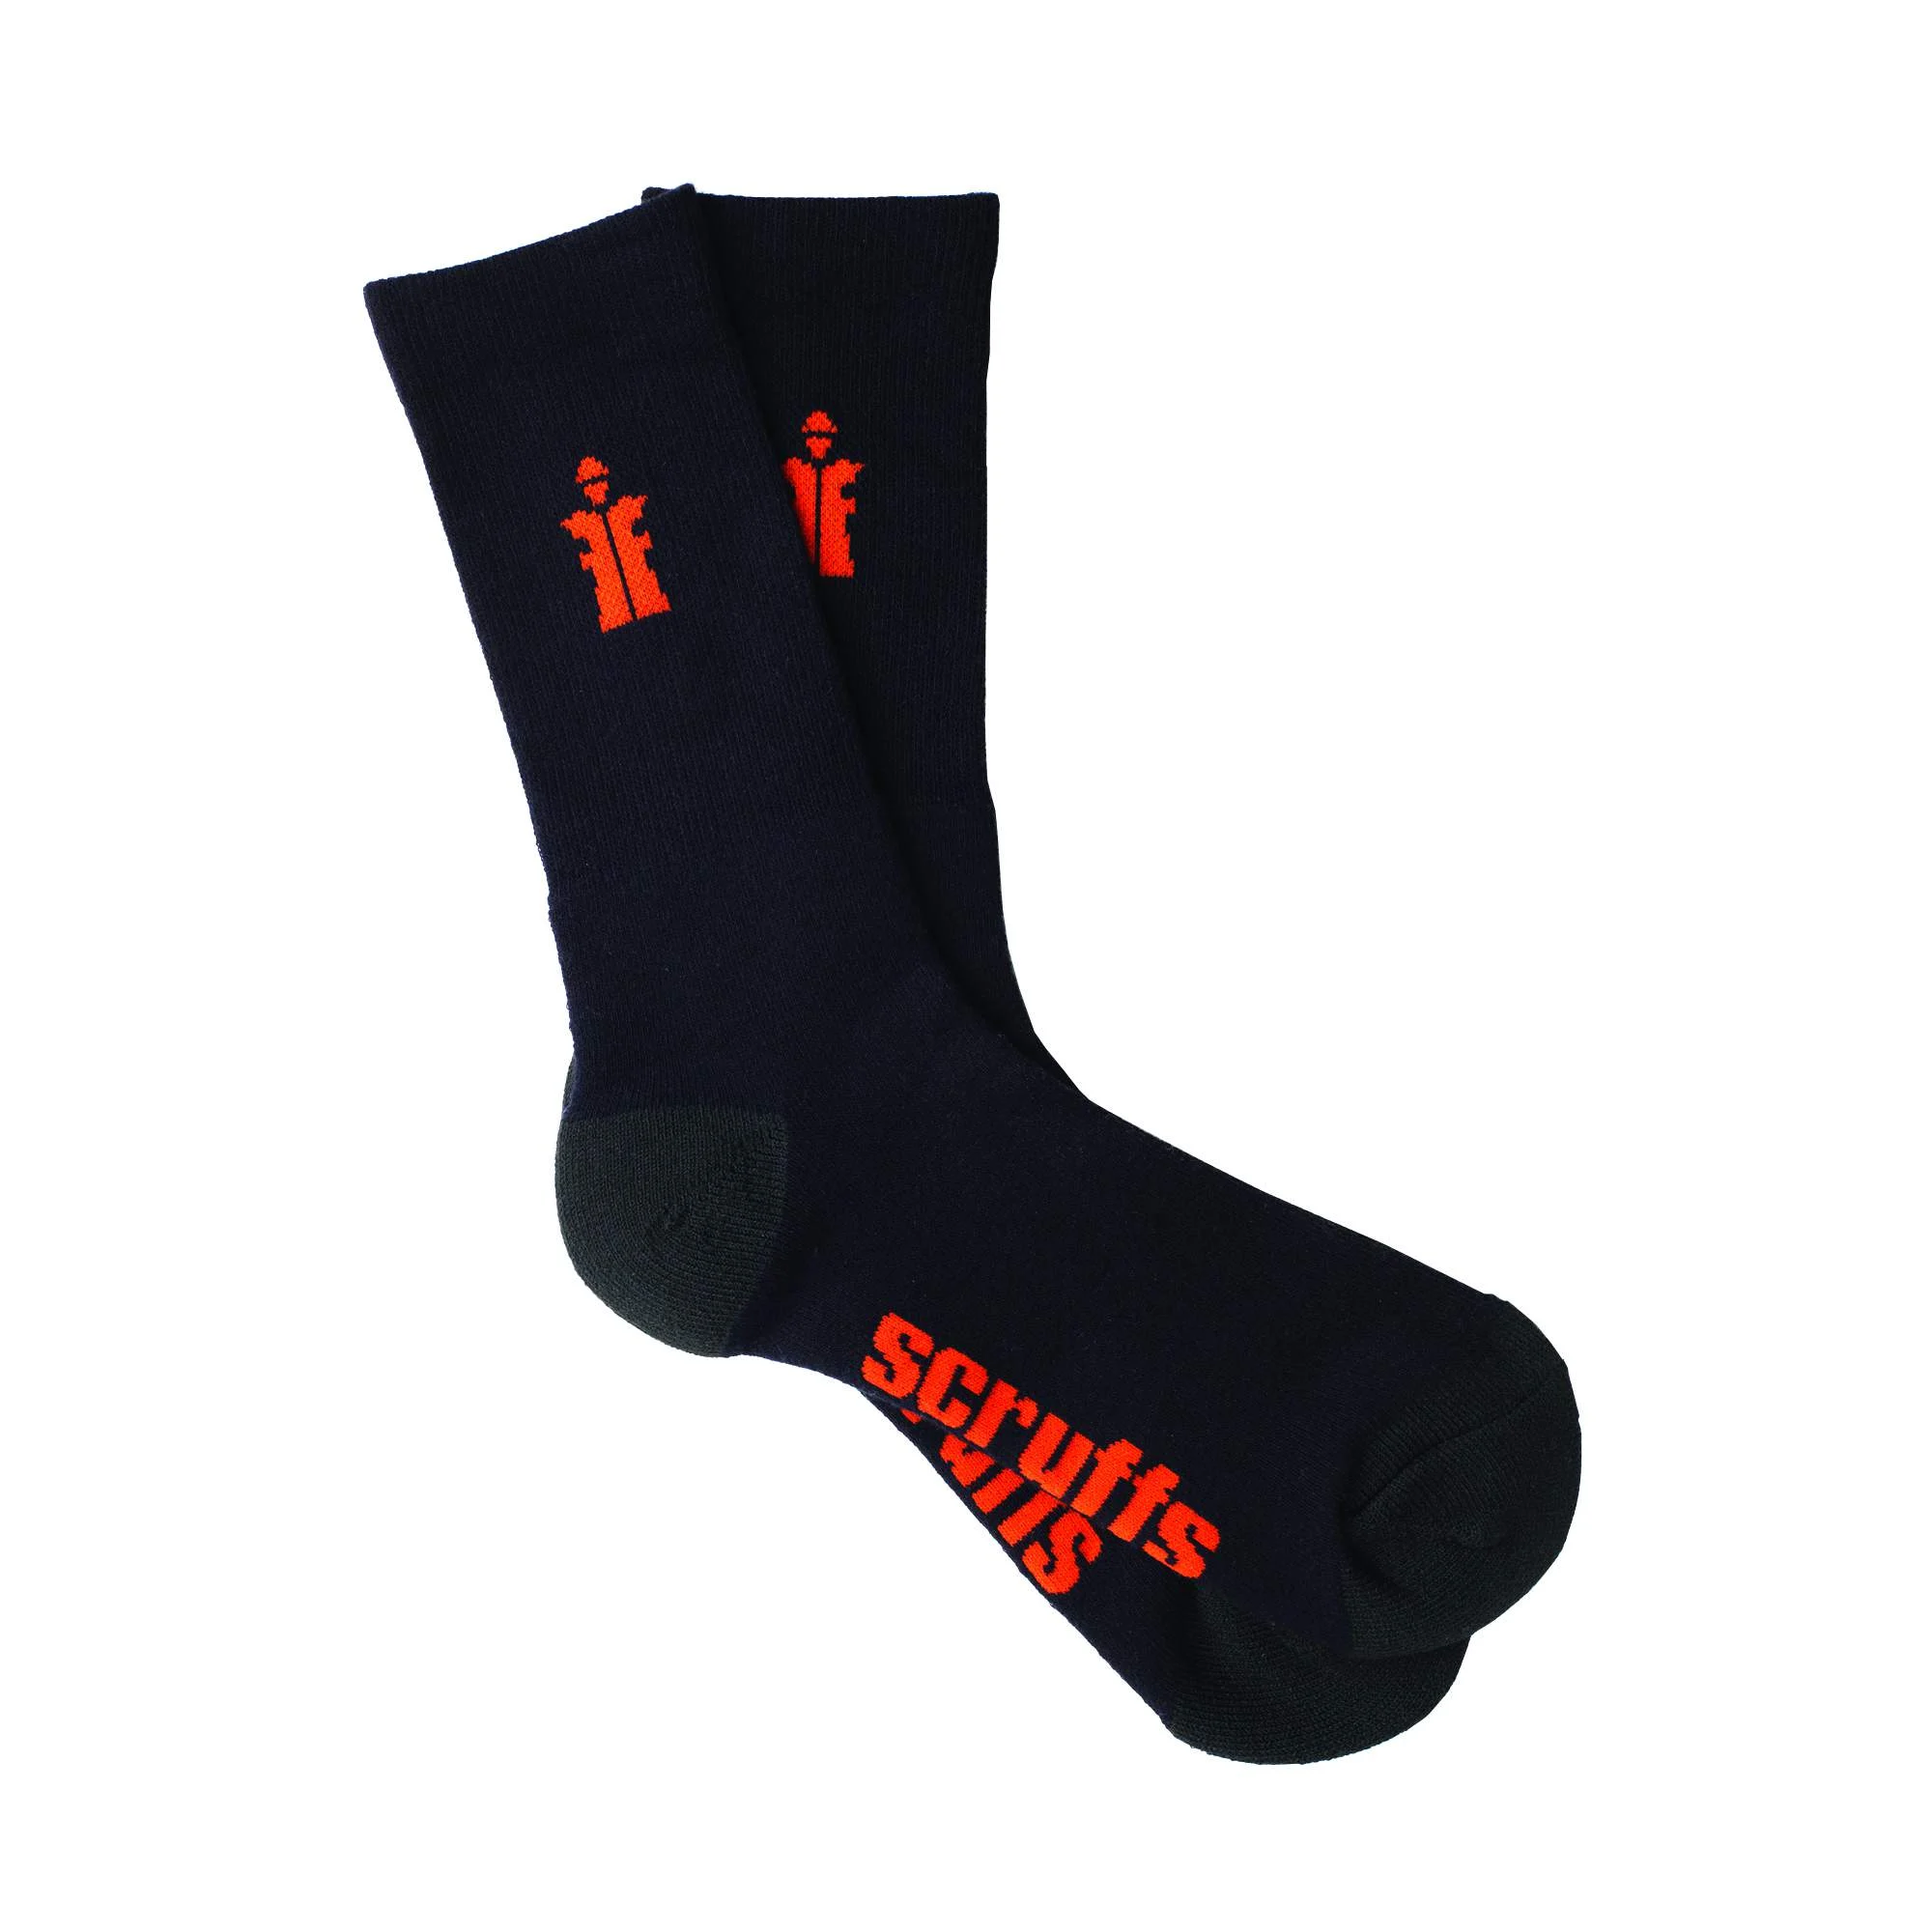 Sockshop BSMHH81H1BLK Men's Heat Holders Workforce Reinforced Socks 6-11  Black